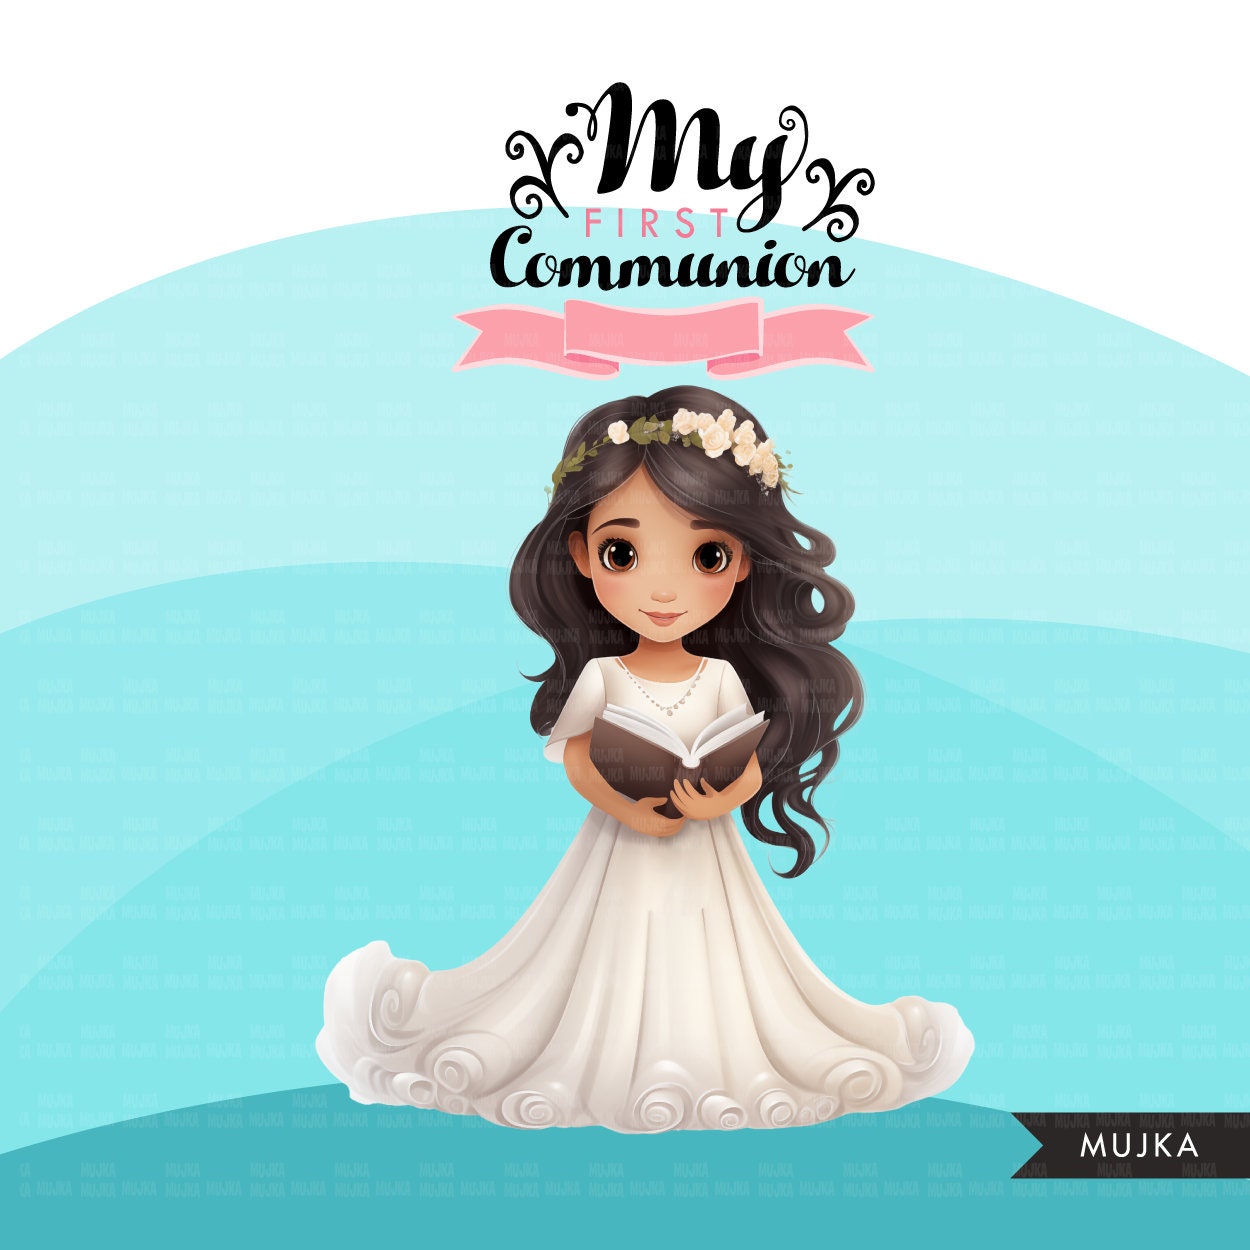 First Communion Clipart for Girls, Mi Primera Comunion PNG, bible, communion banner, Catholic religious Latina girls, digital stickers art